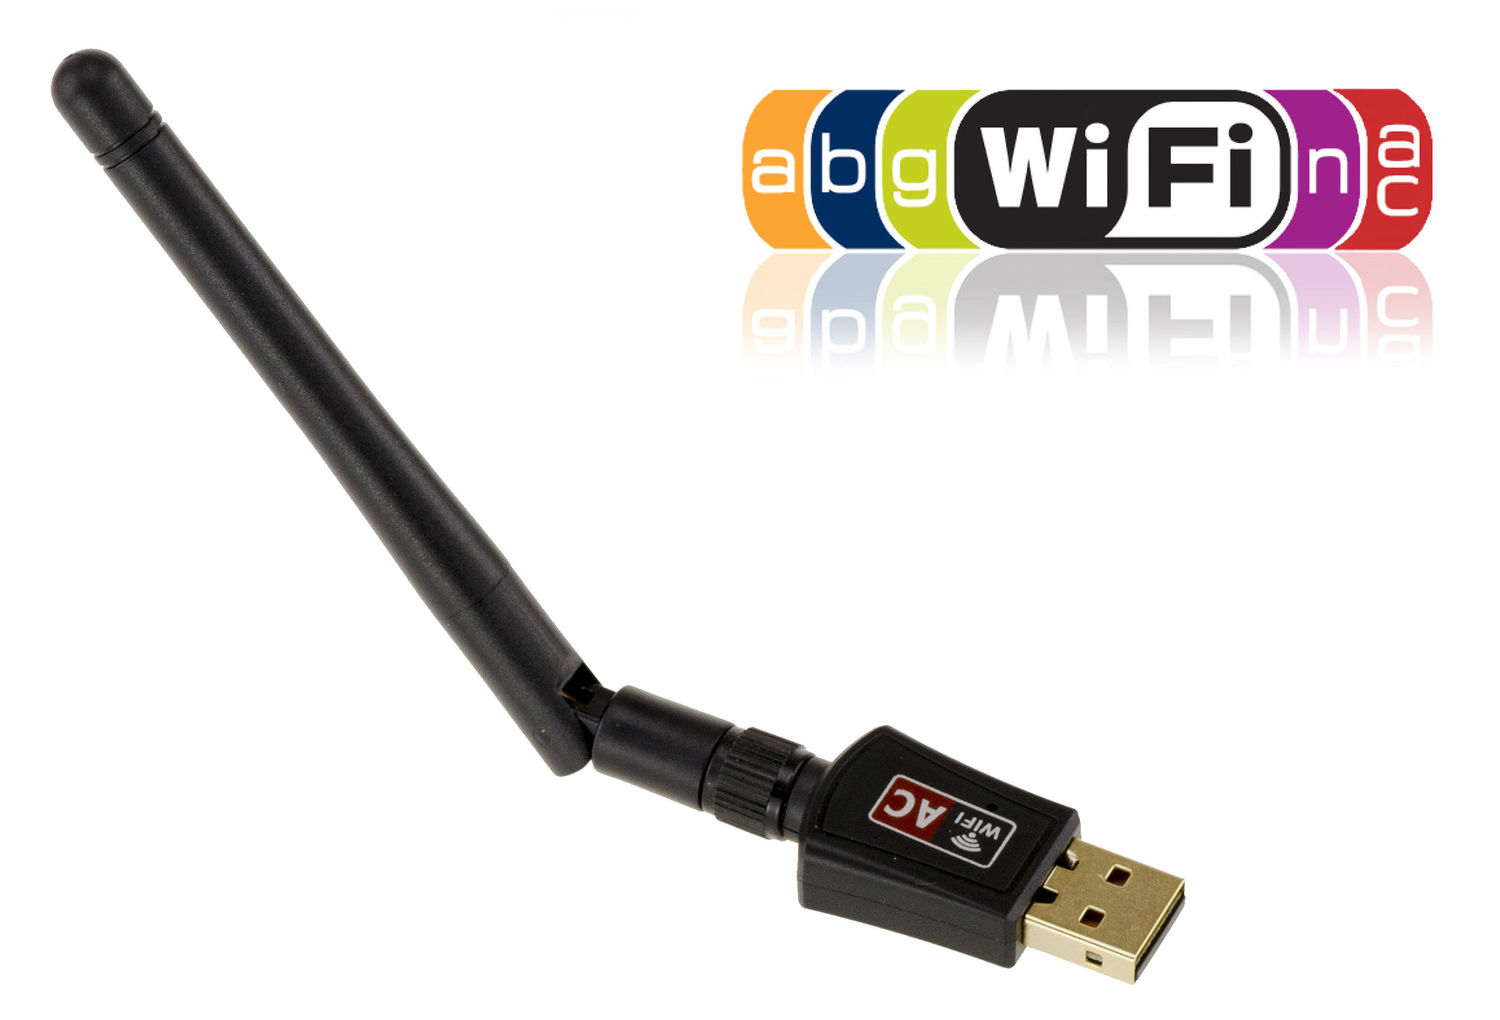 Cle USB 2.0 WIFI IEEE802.11 a/b/g/n/ac - 600AC - Une antenne